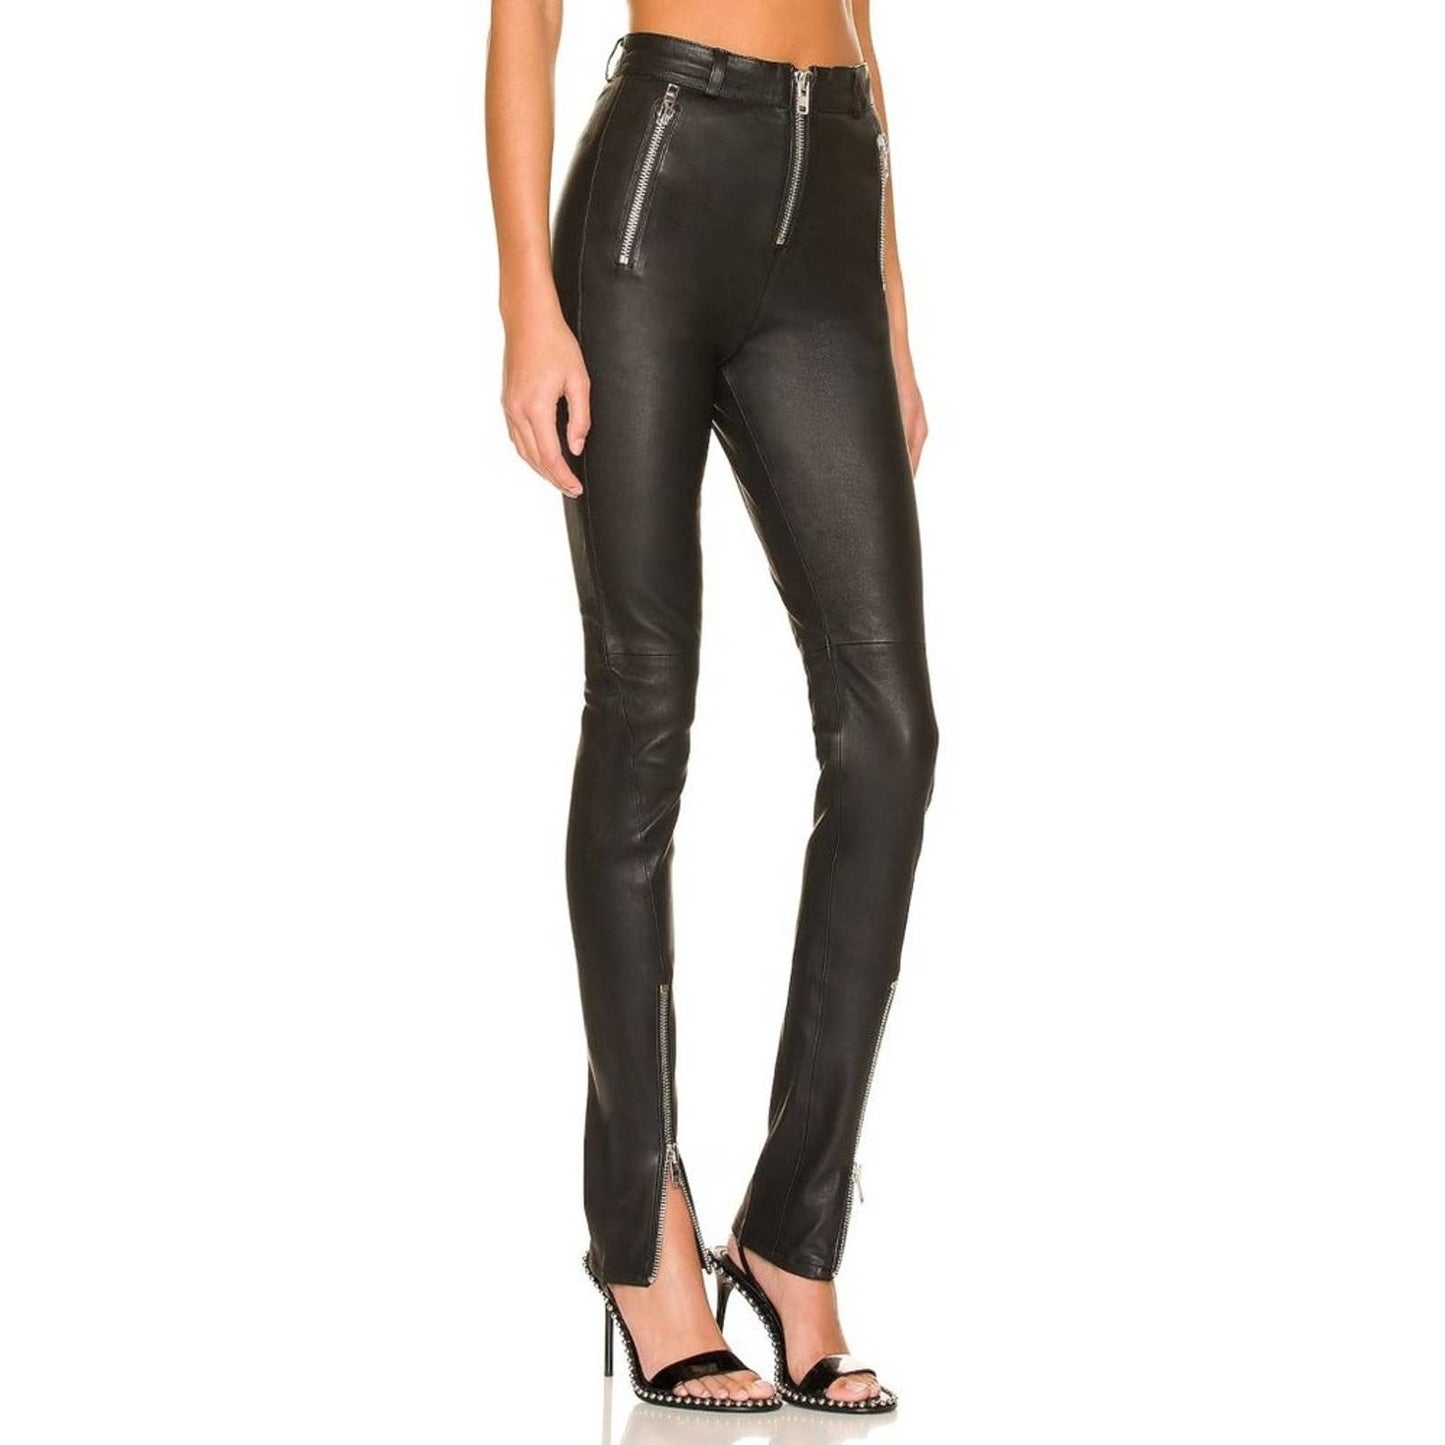 Camila Coelho Ashley Leather Pant in Black NWT Size XXS